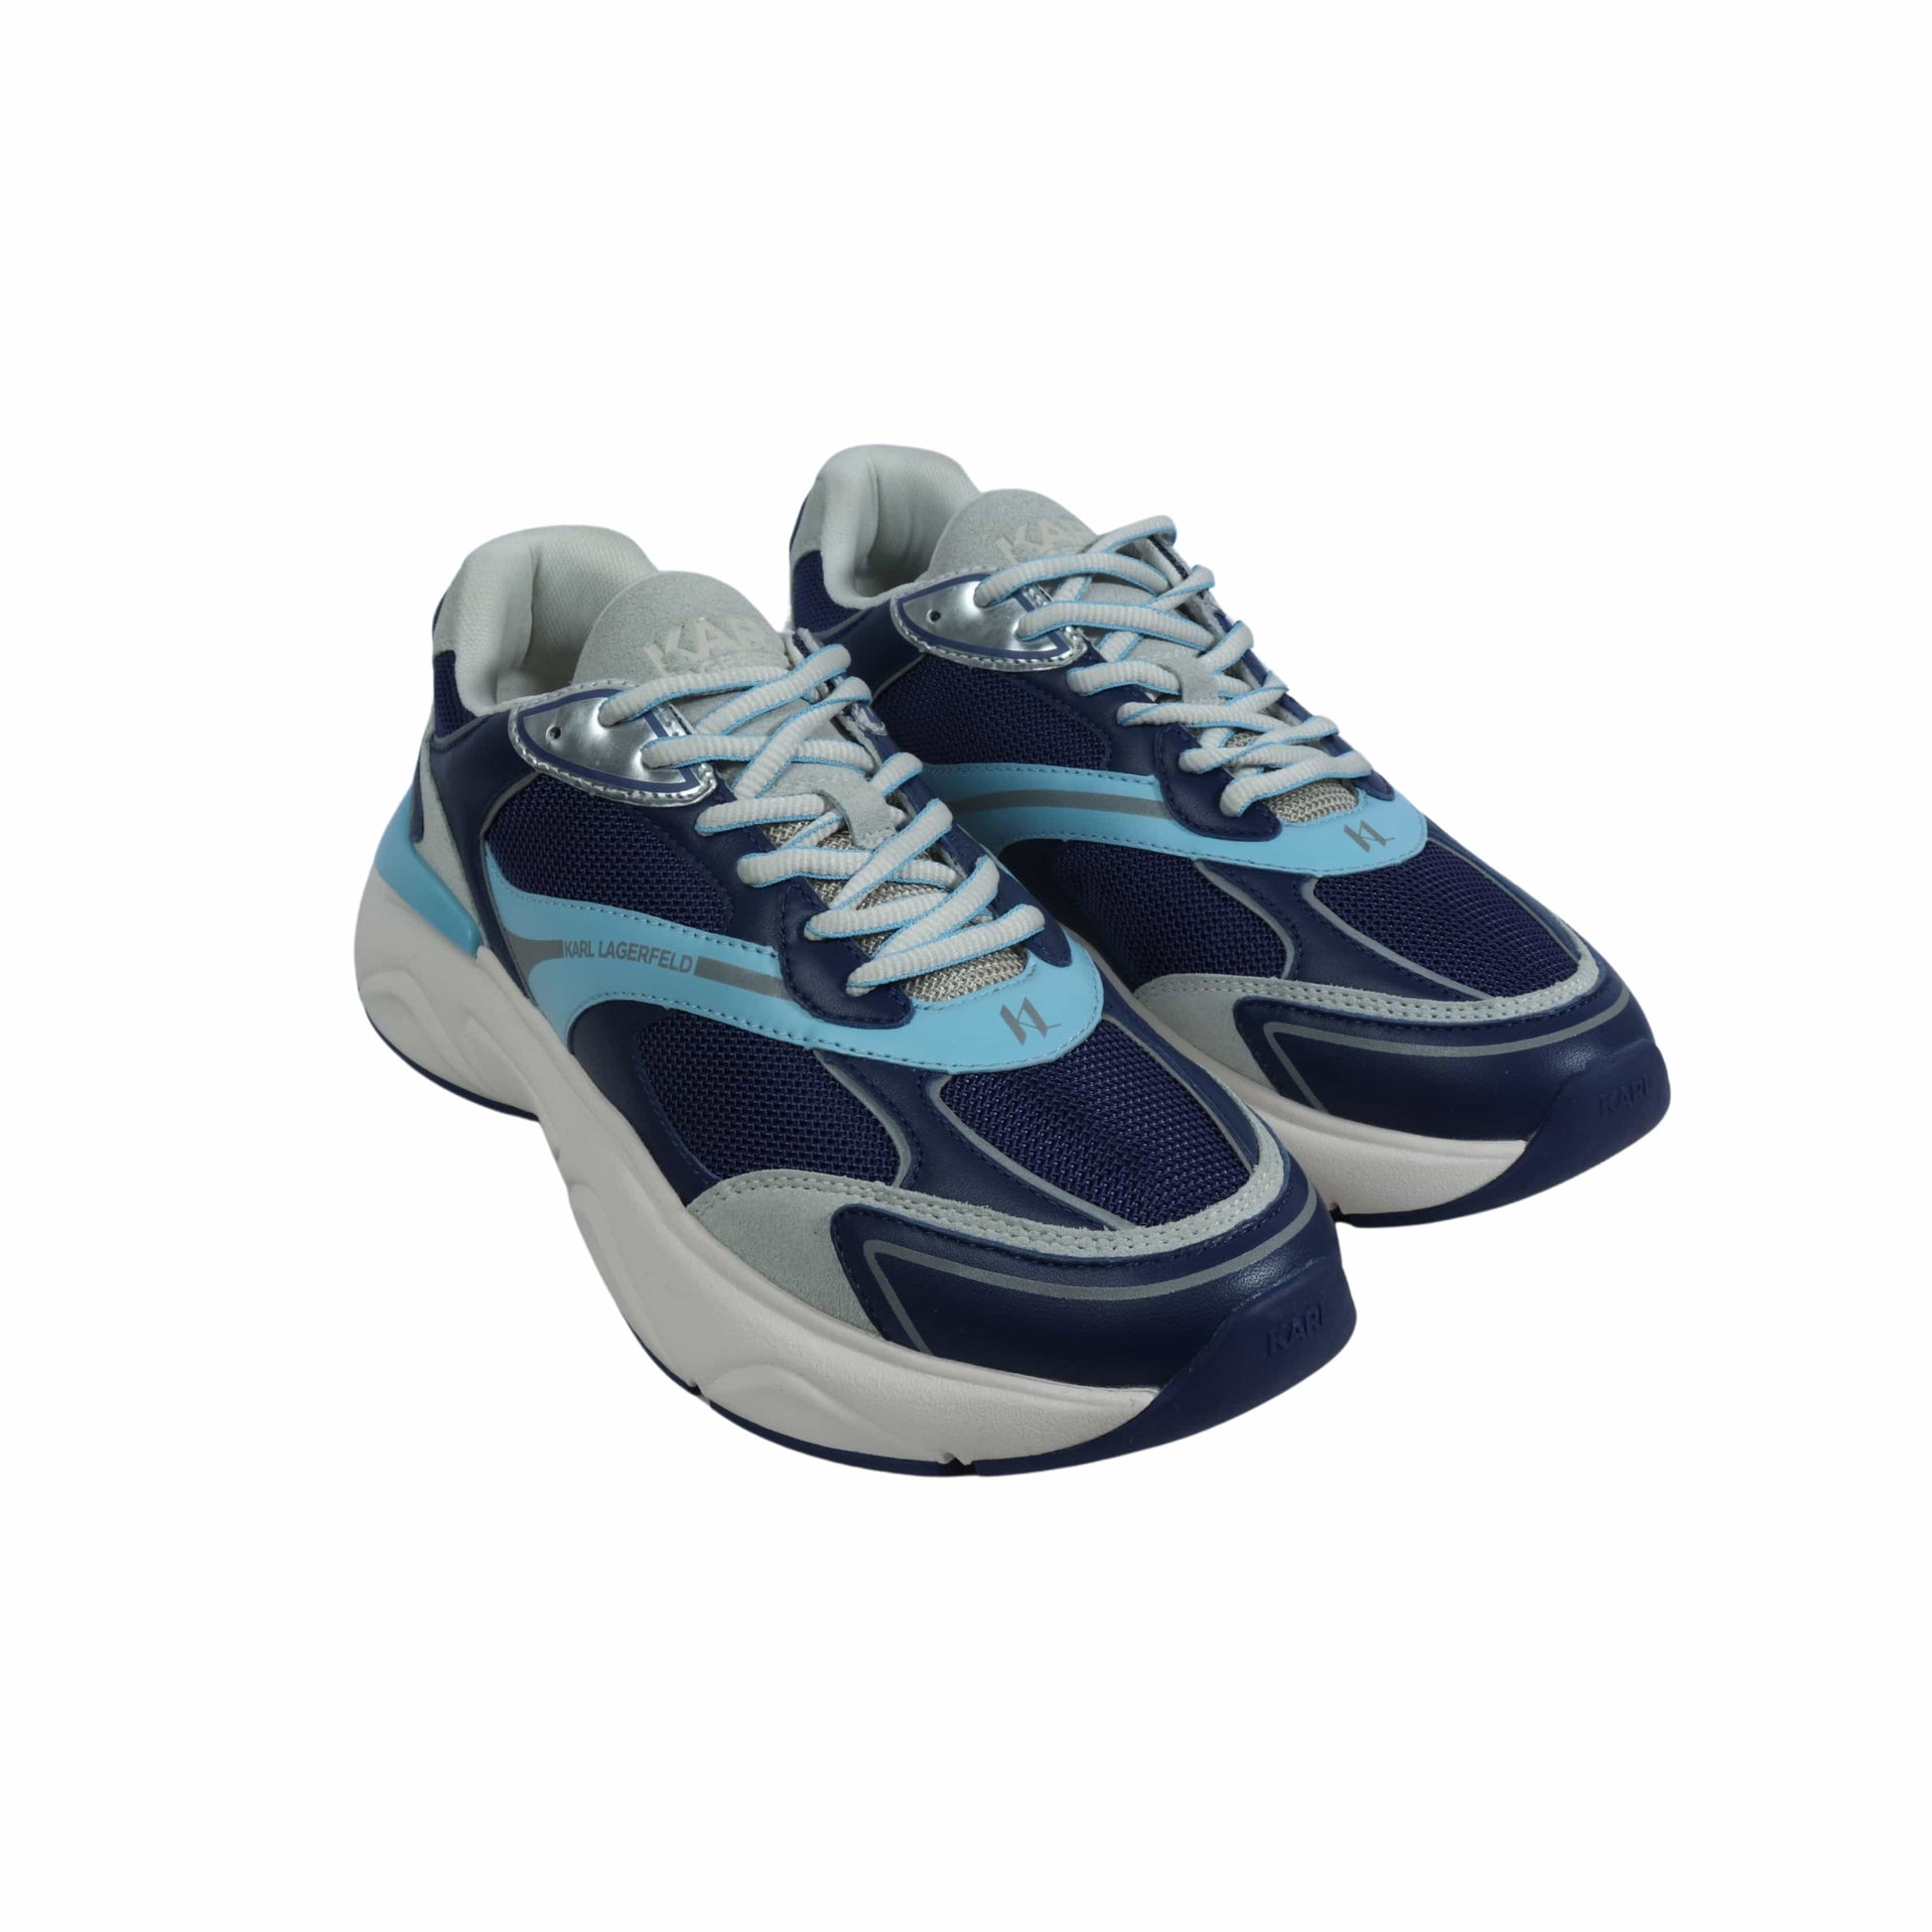 KARL LAGERFELD Mens Shoes 42 / Multi-Color KARL LAGERFELD - Multi-Colored Sneakers